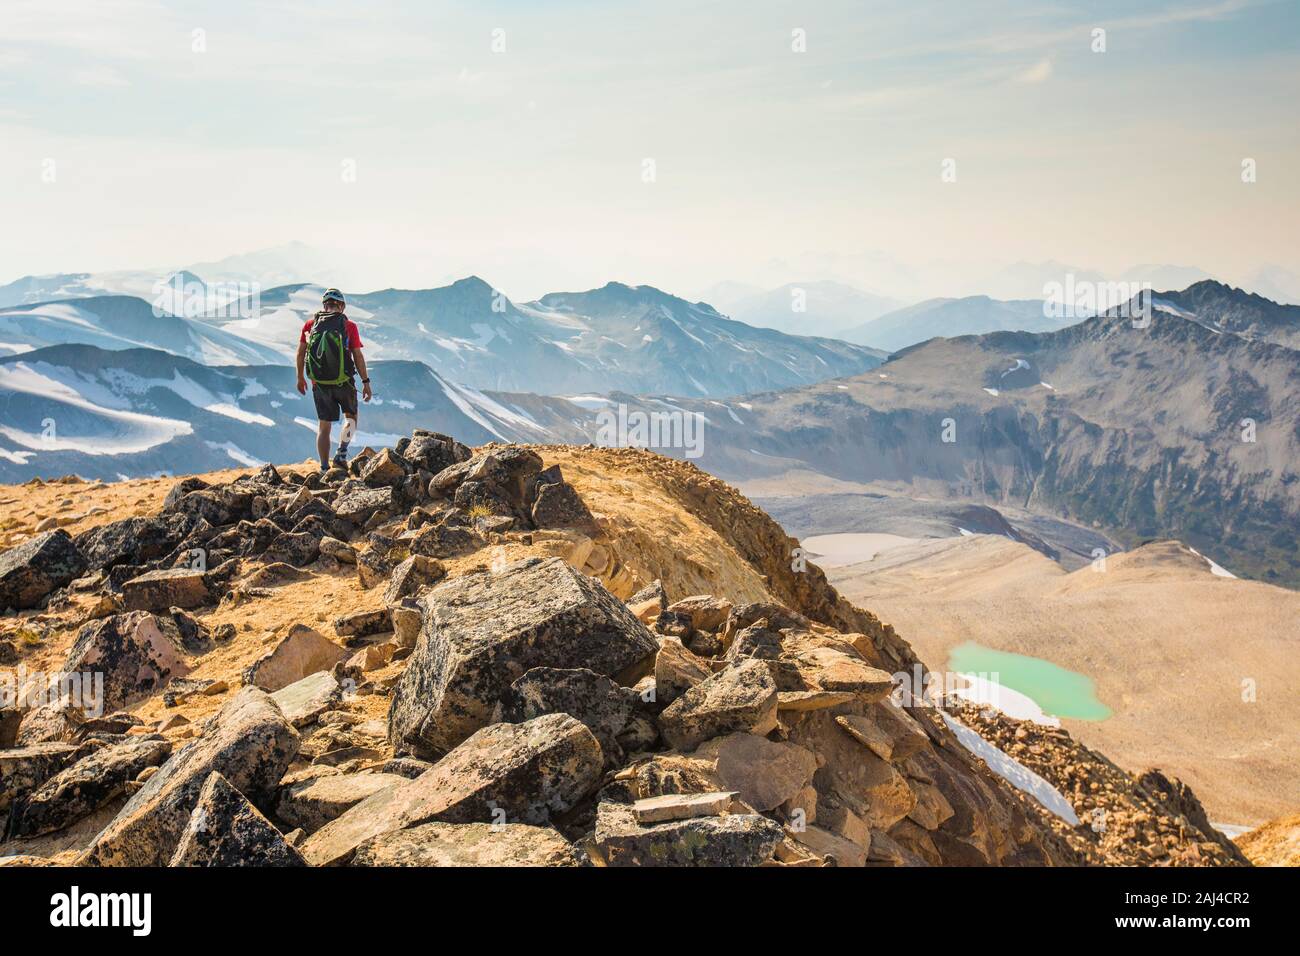 Backpacker hiking on mountain summit. Stock Photo